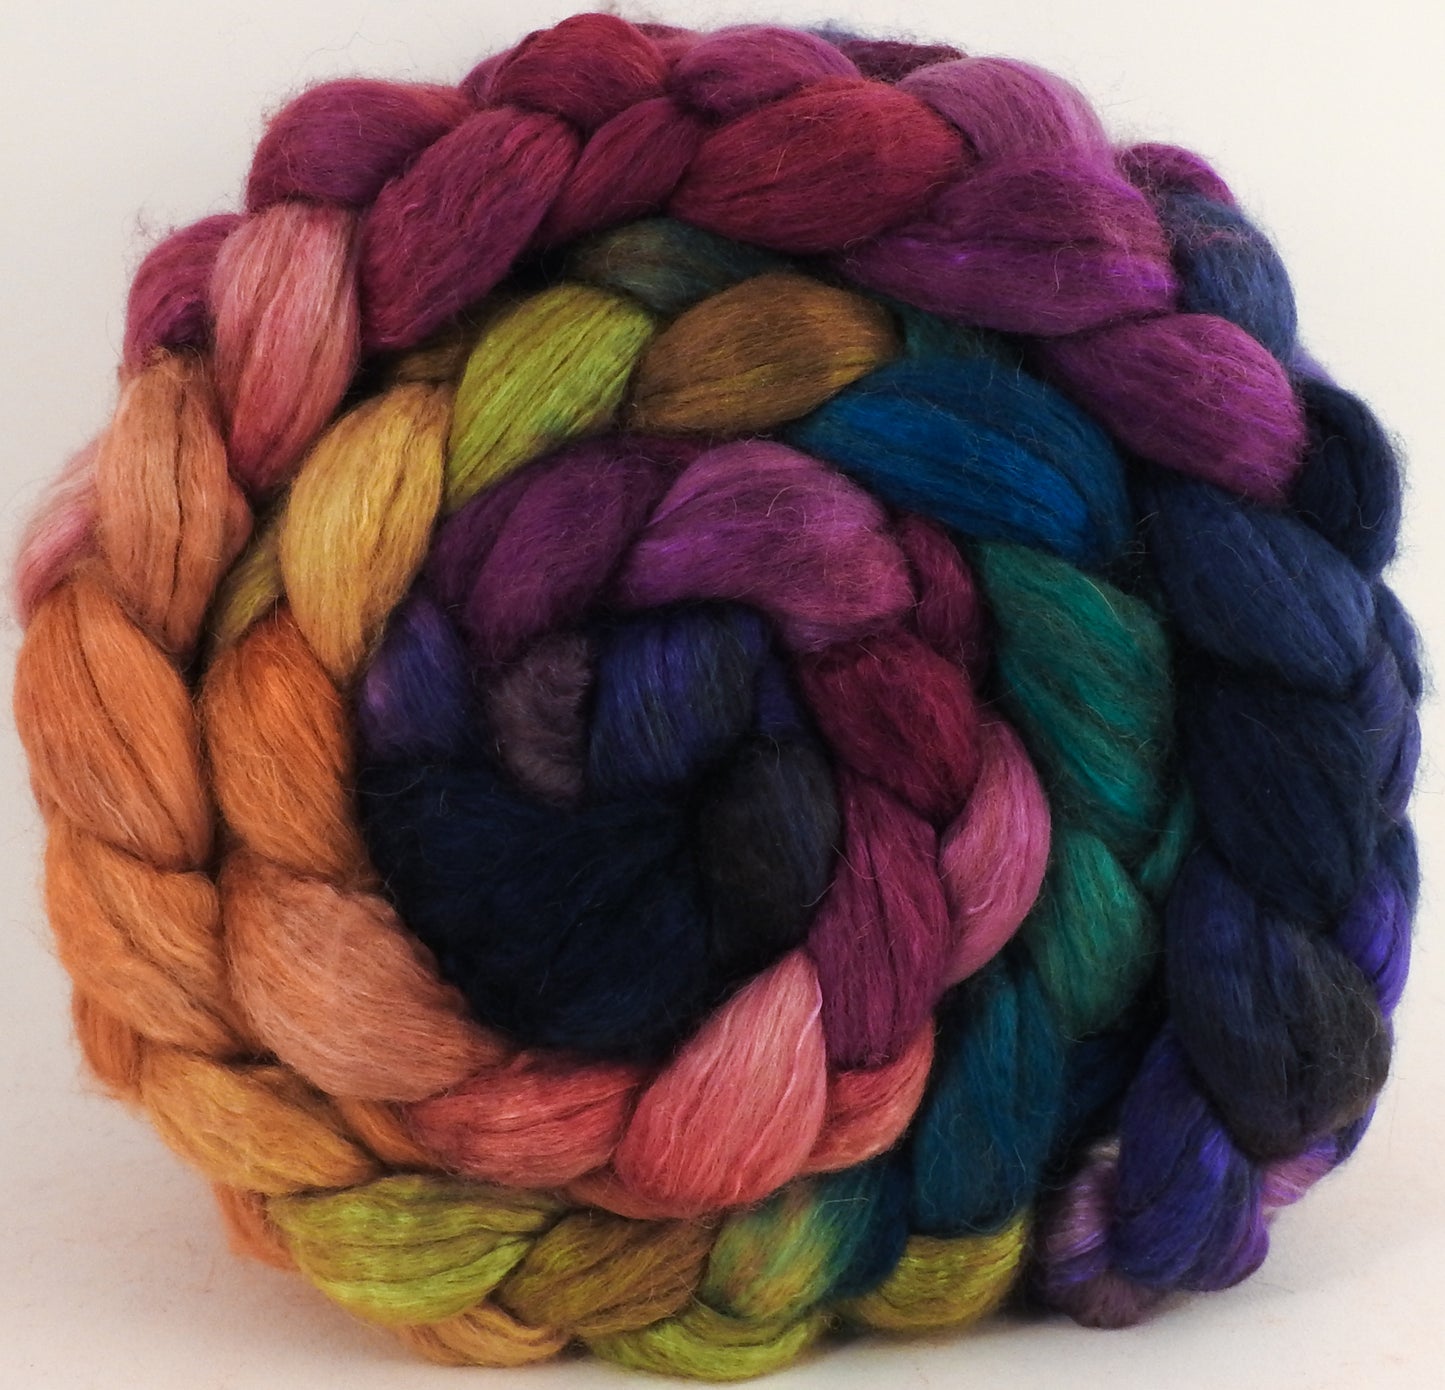 Baby camel/ tussah silk top ( 50/50)- Yarn bombing - Inglenook Fibers